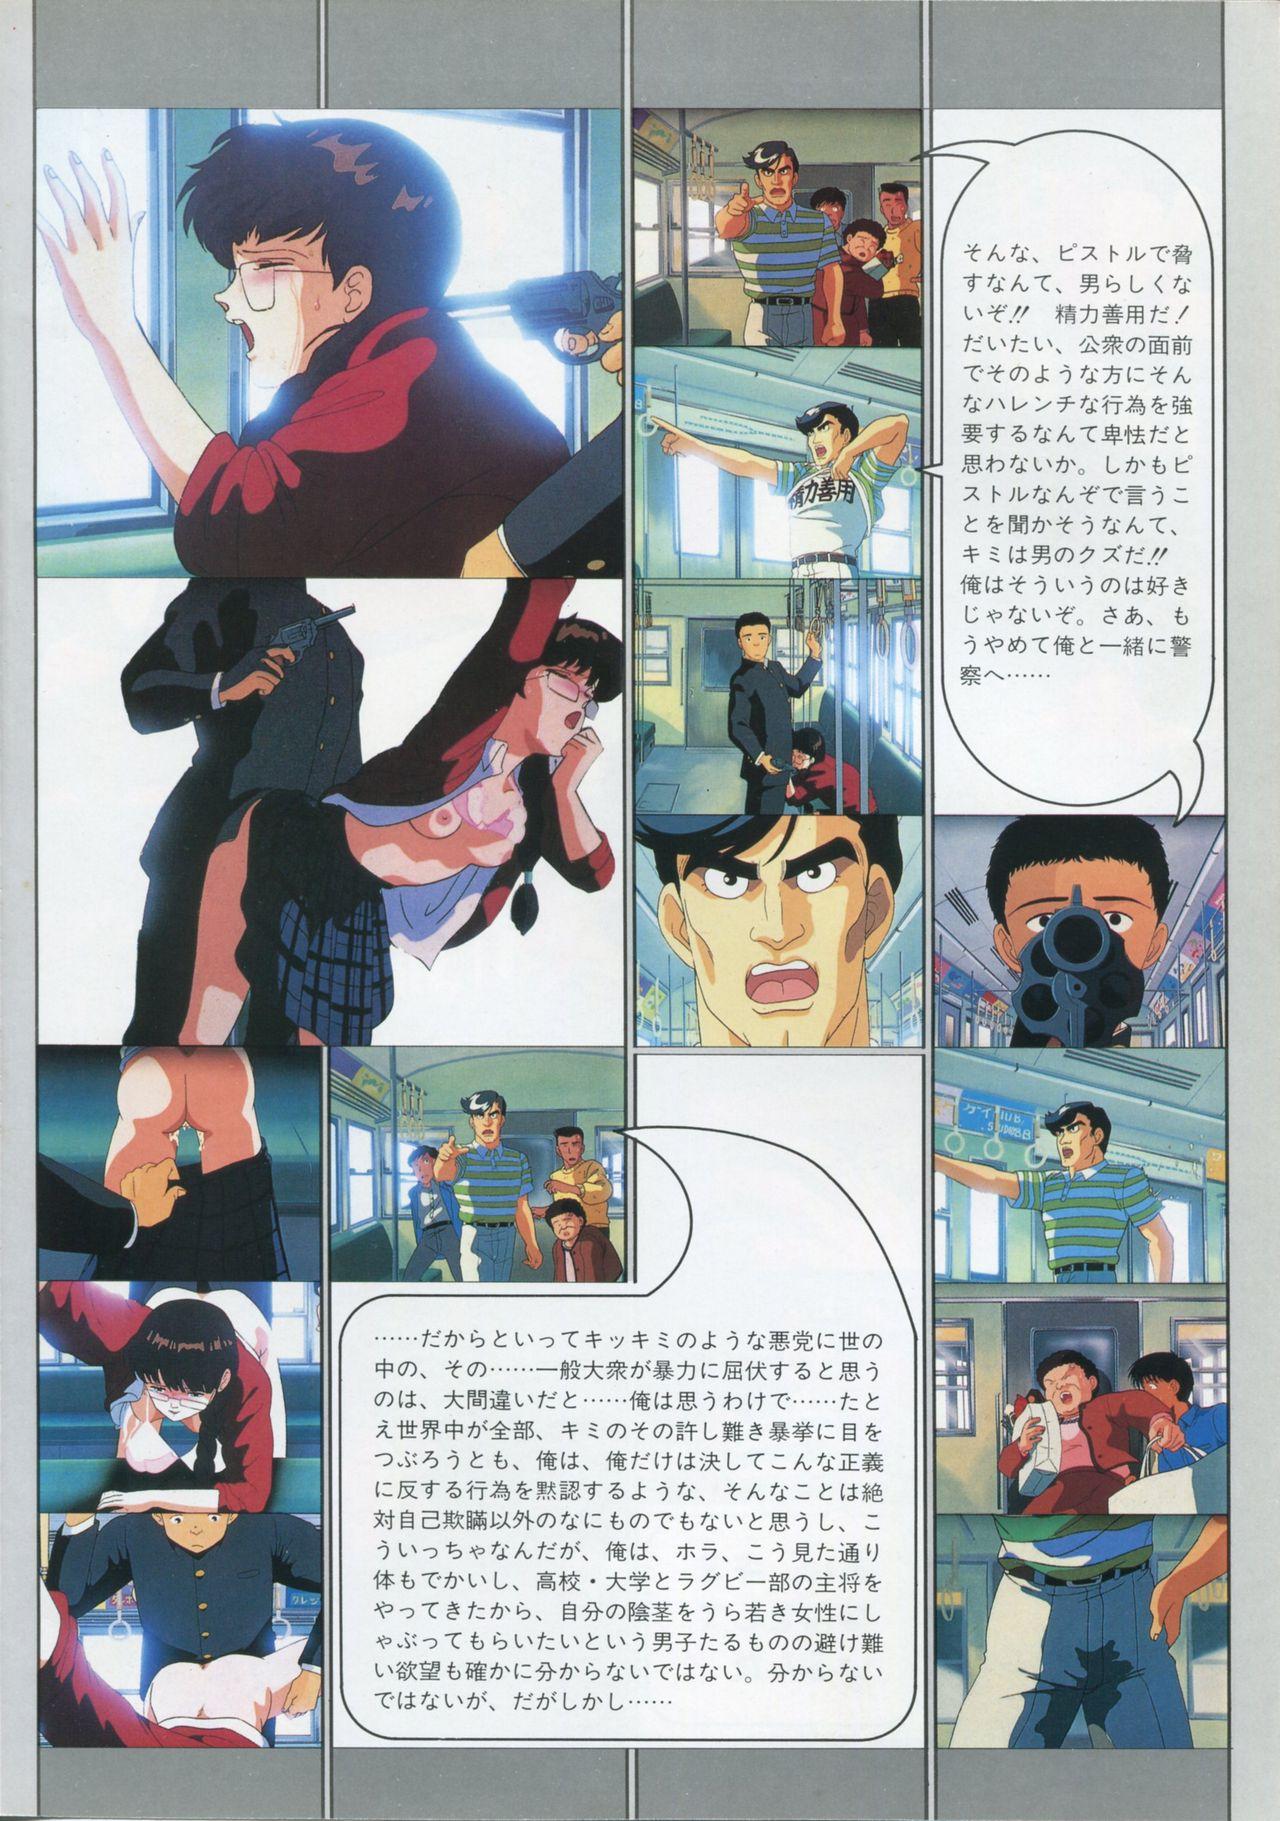 Bishoujo Anime Daizenshuu - Adult Animation Video Catalog 1991 23